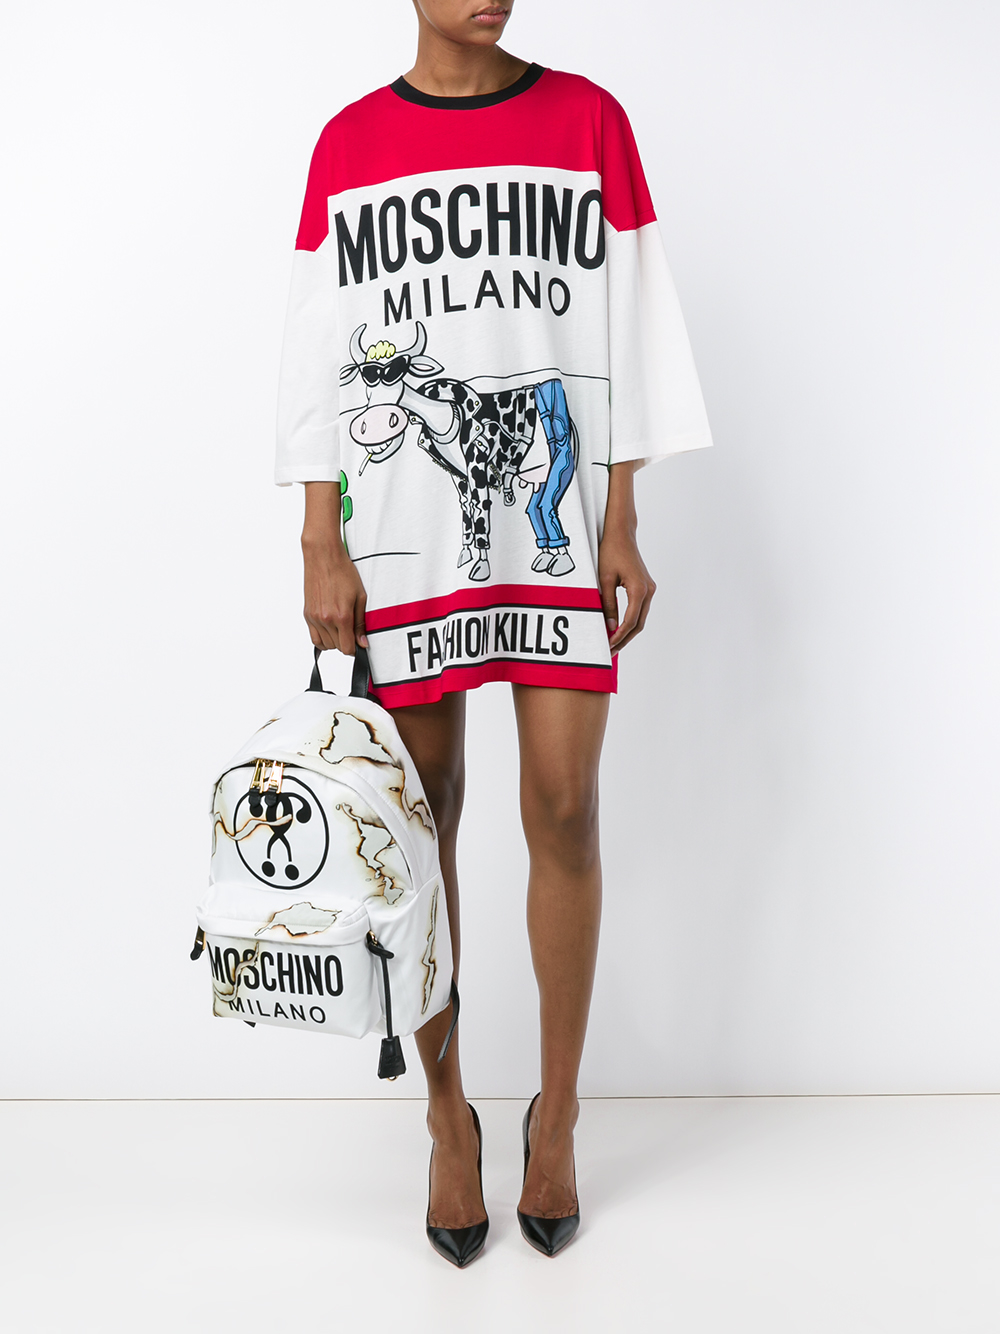 Moschino Fashion Kills T-shirt Dress in Red | Lyst